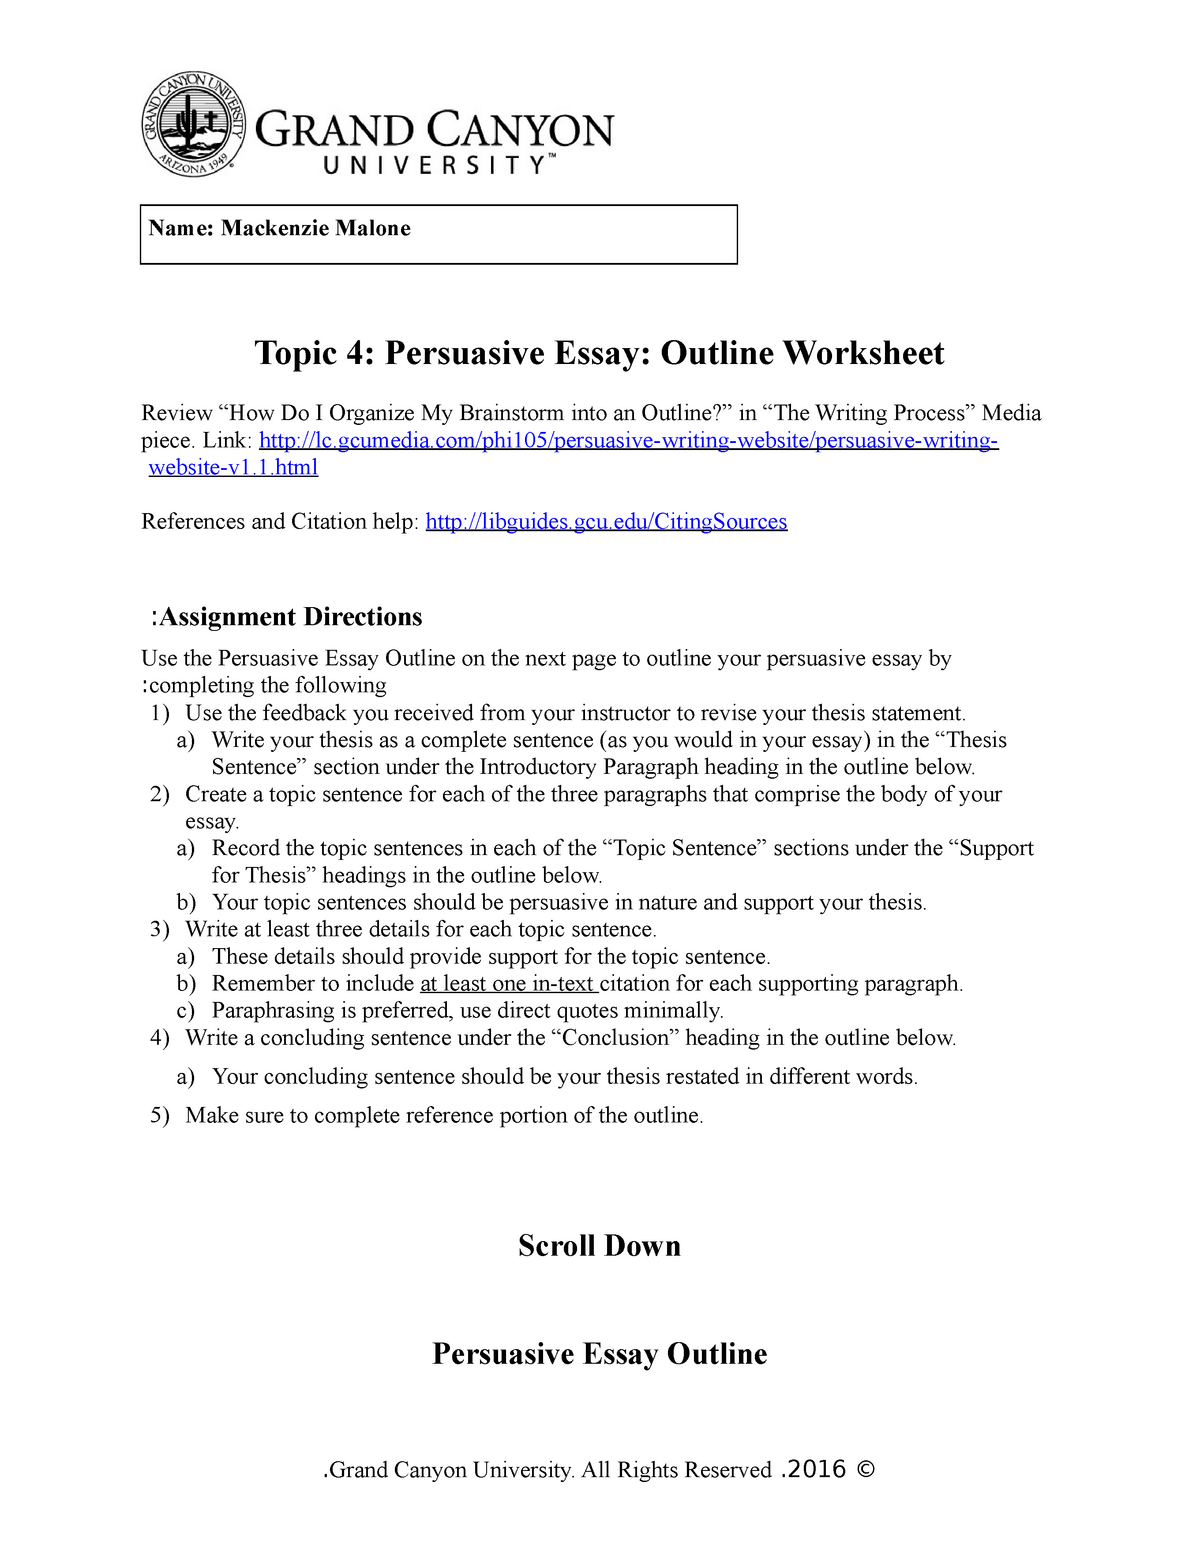 persuasive essay outline worksheet gcu